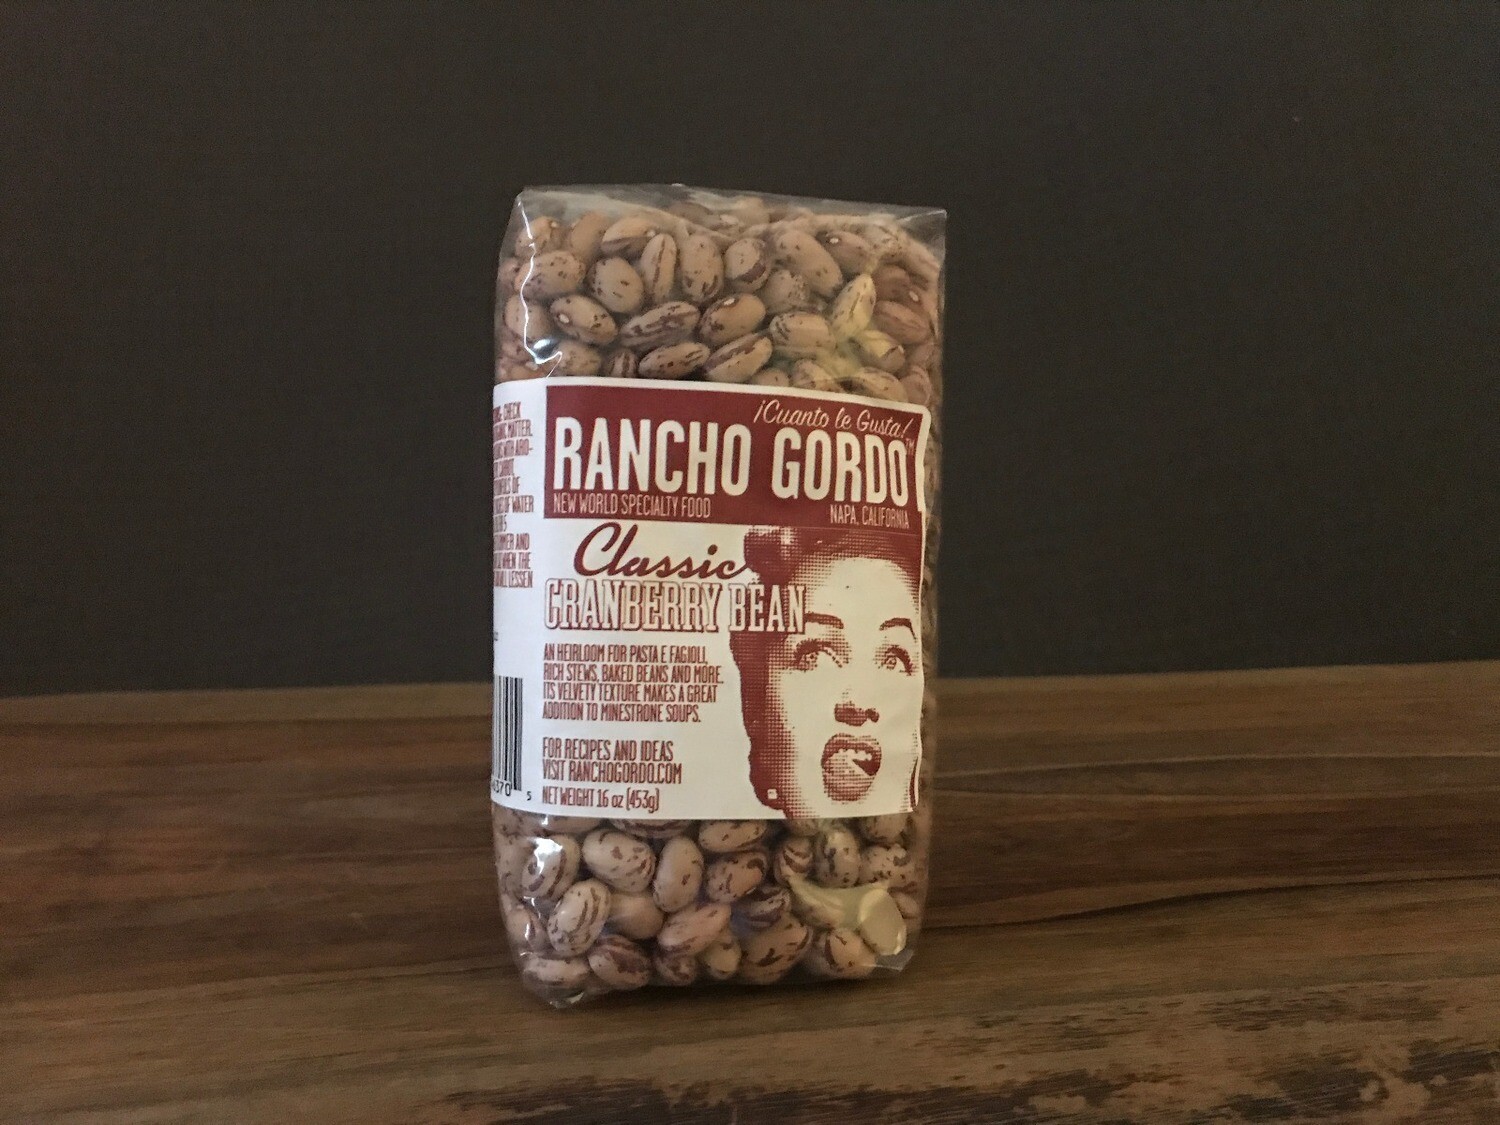 Rancho Gordo Cranberry Beans